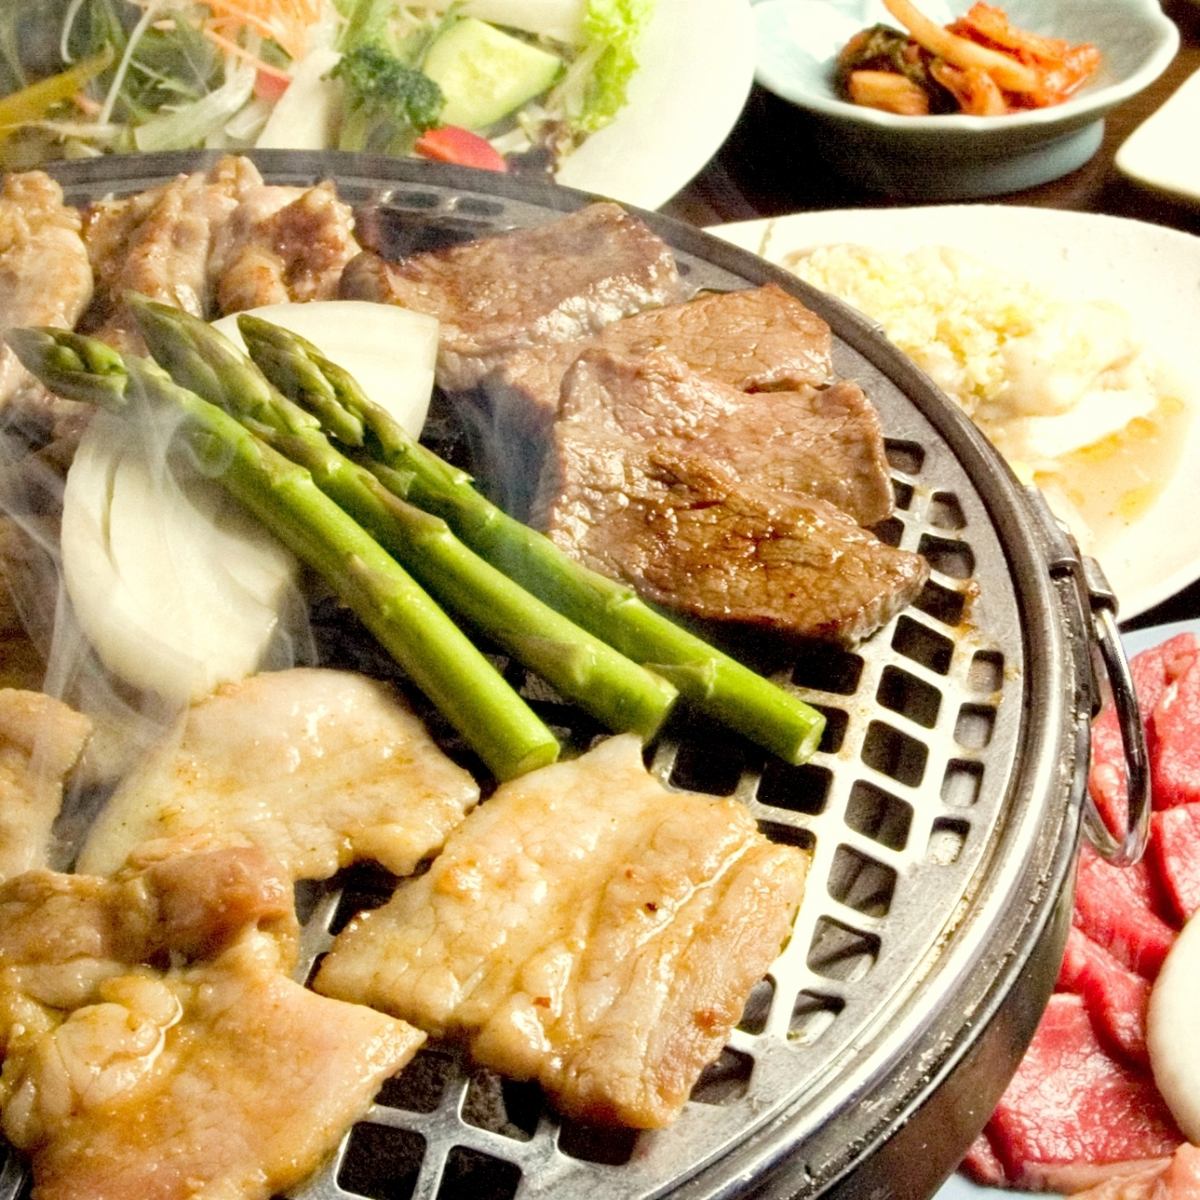 All-you-can-eat and drink yakiniku, shabu-shabu, and sukiyaki using Japanese beef!